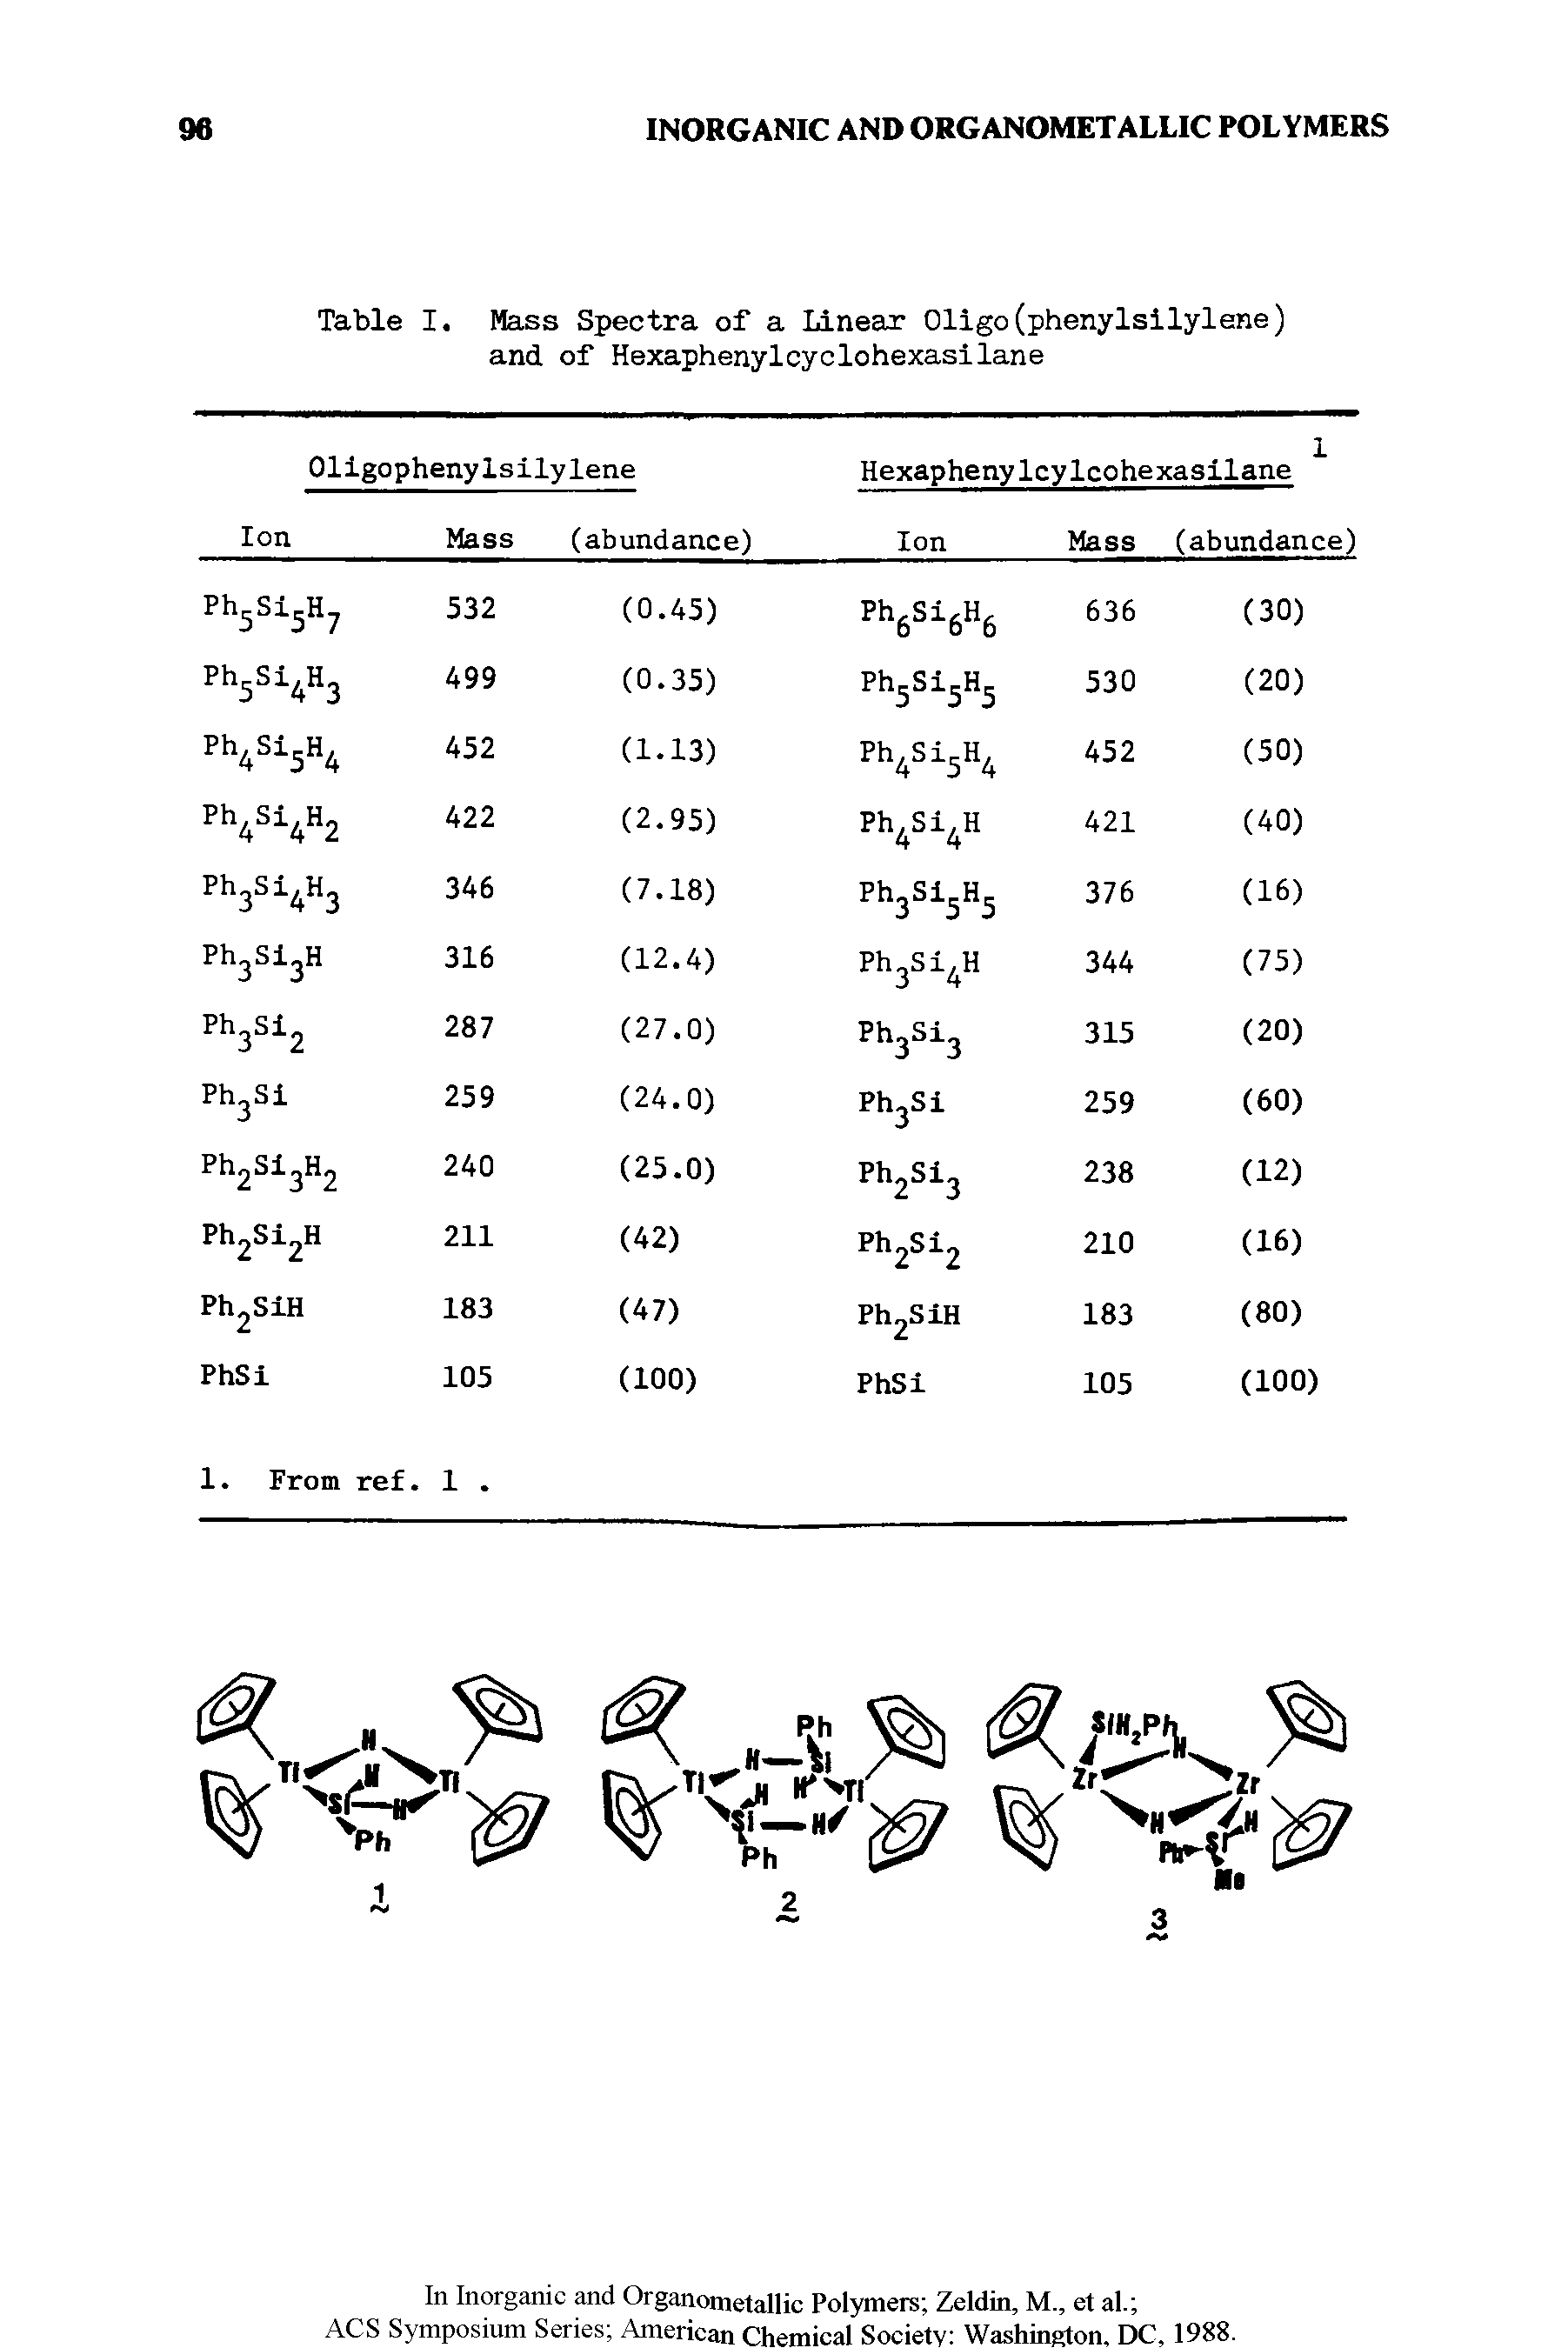 Table I. Mass Spectra of a Linear Oligo(phenylsilylene) and of Hexaphenylcyclohexasilane...